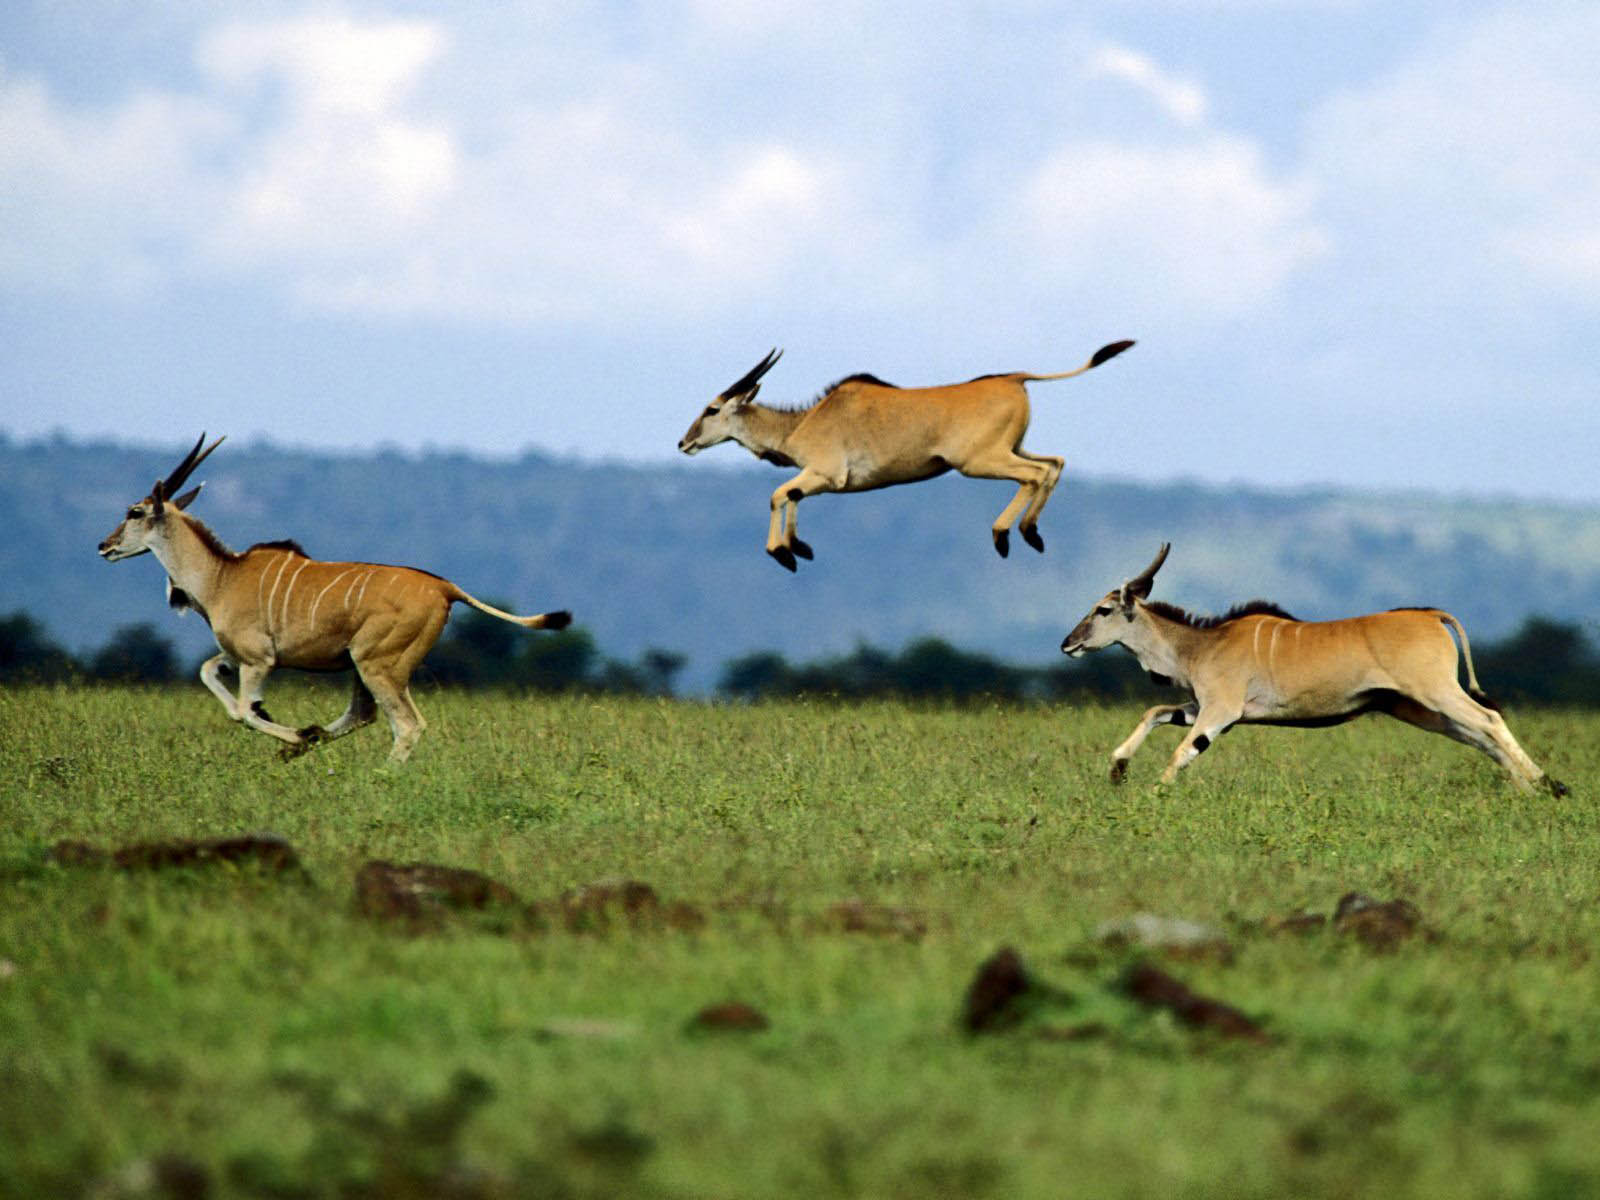 Eland Kenya Africa Animals Wallpaper Image With African Wildlife